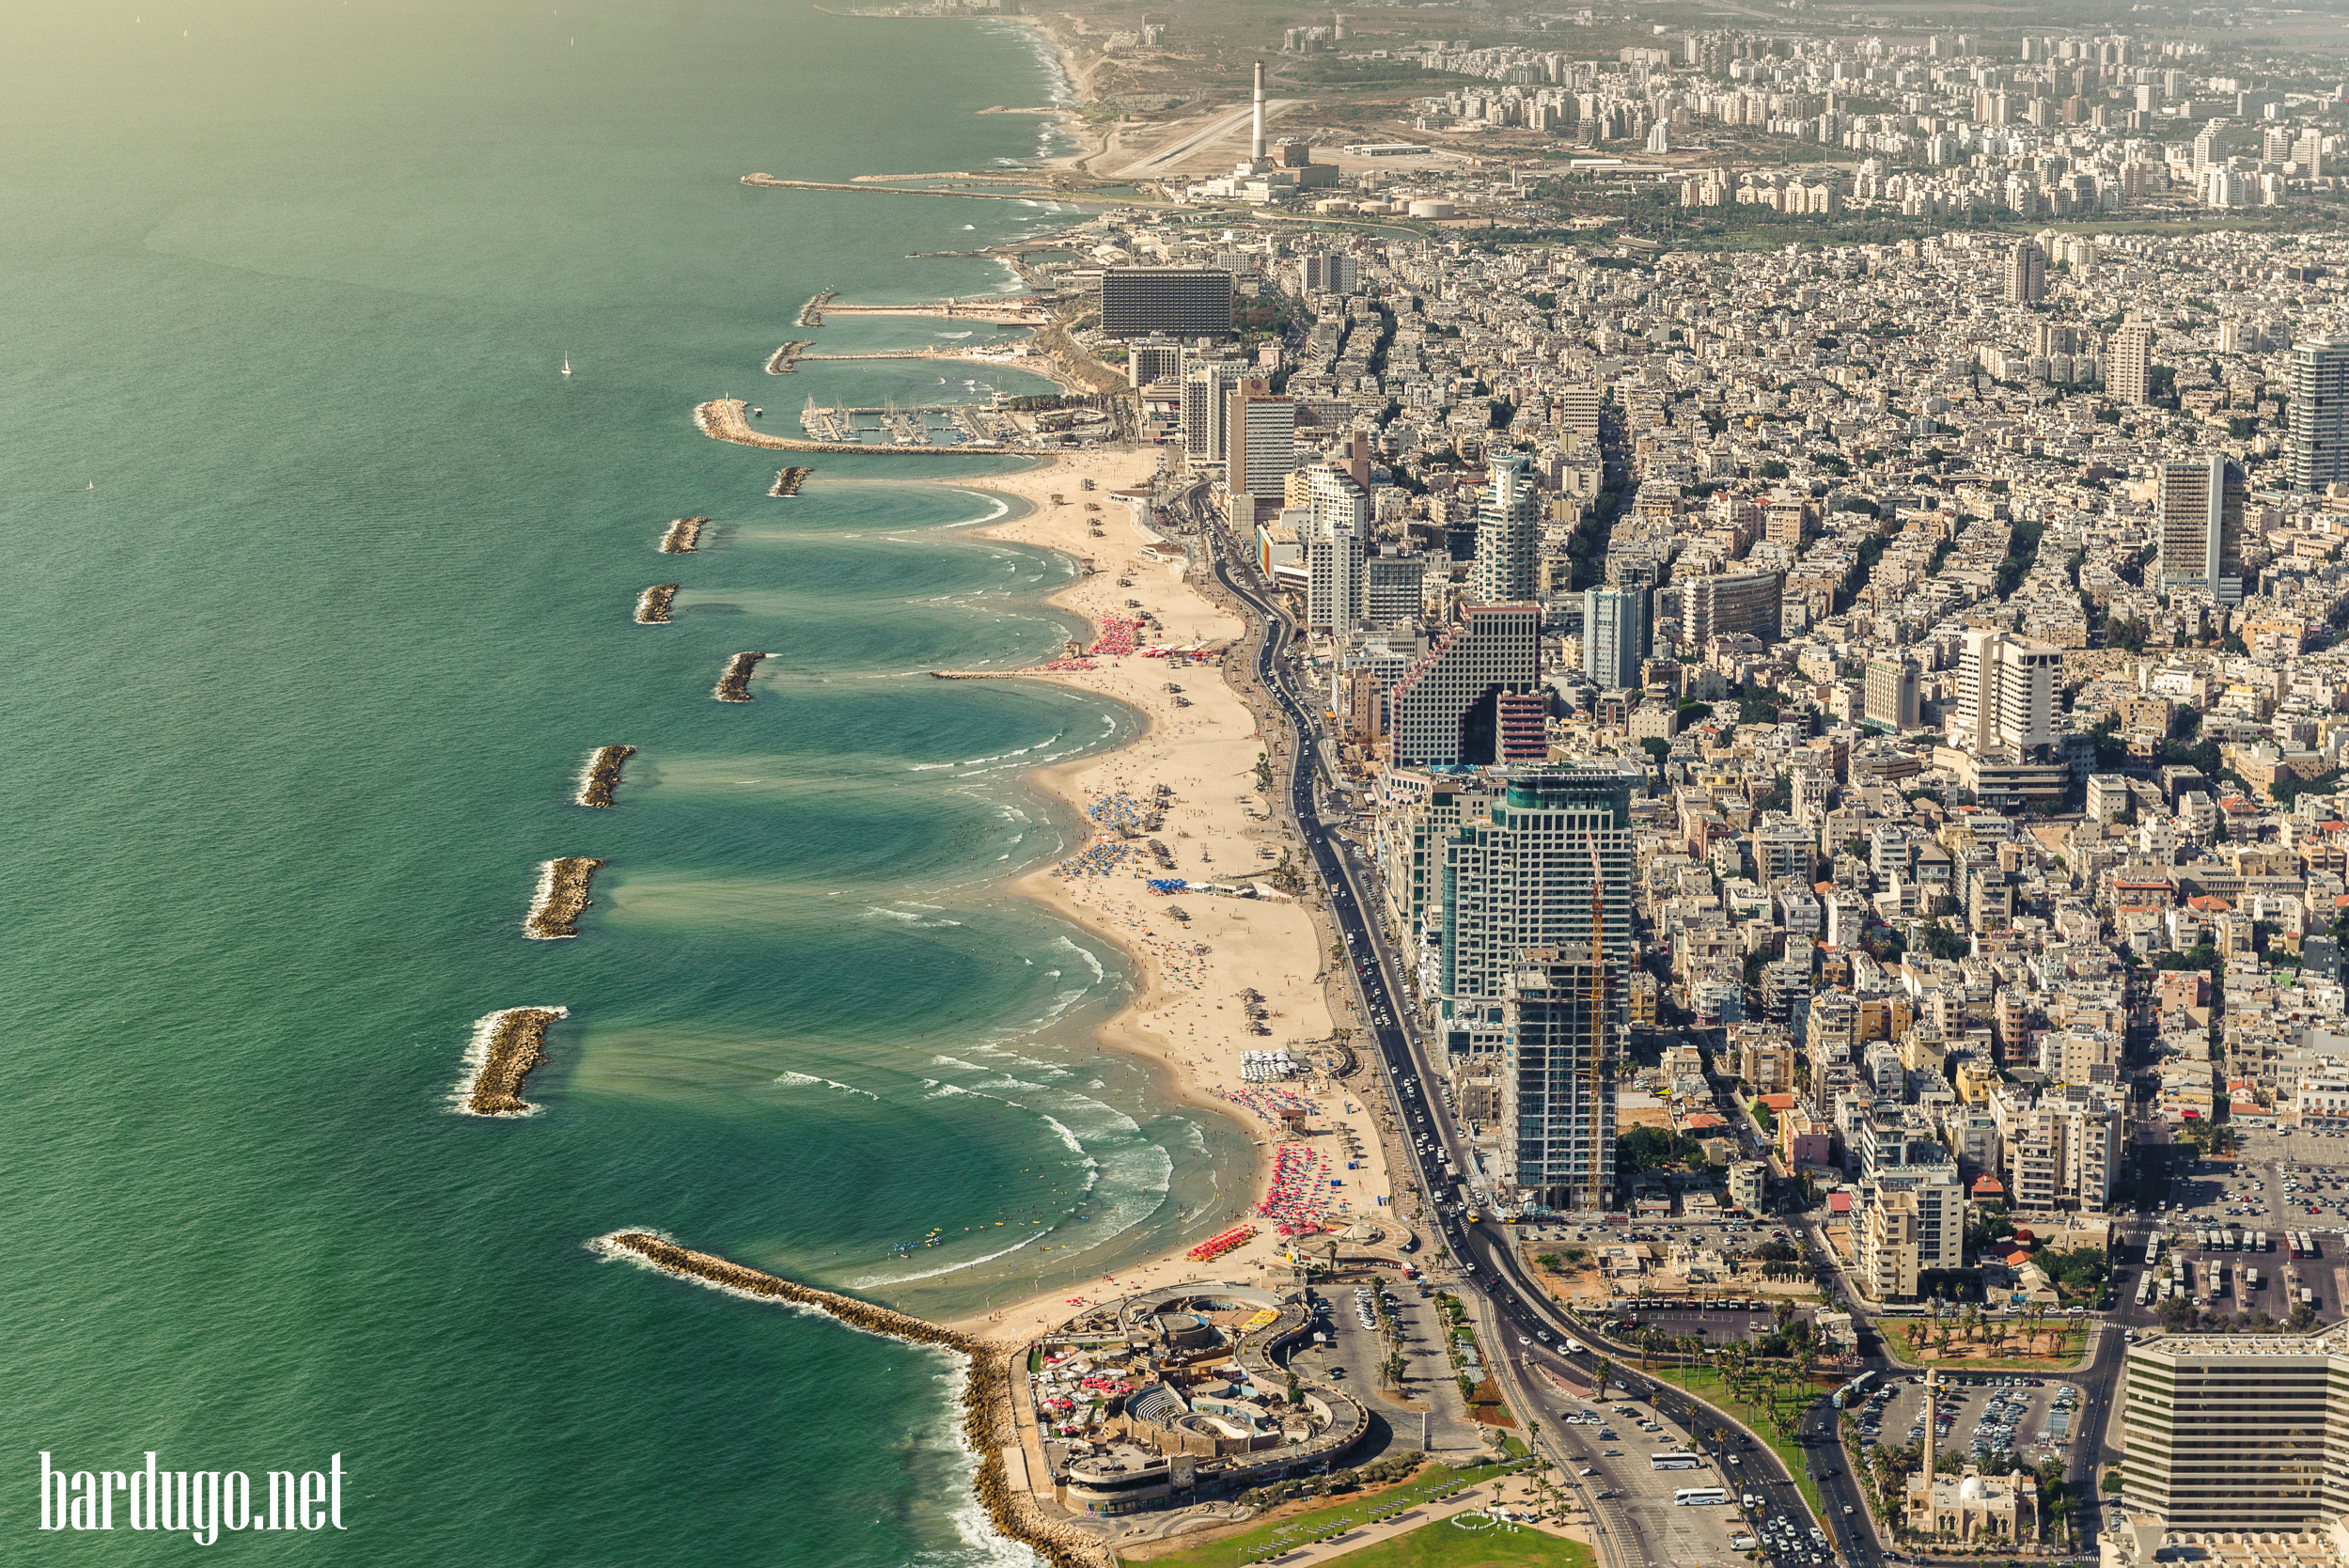  tel aviv aerial photo תל אביב מהאוויר  